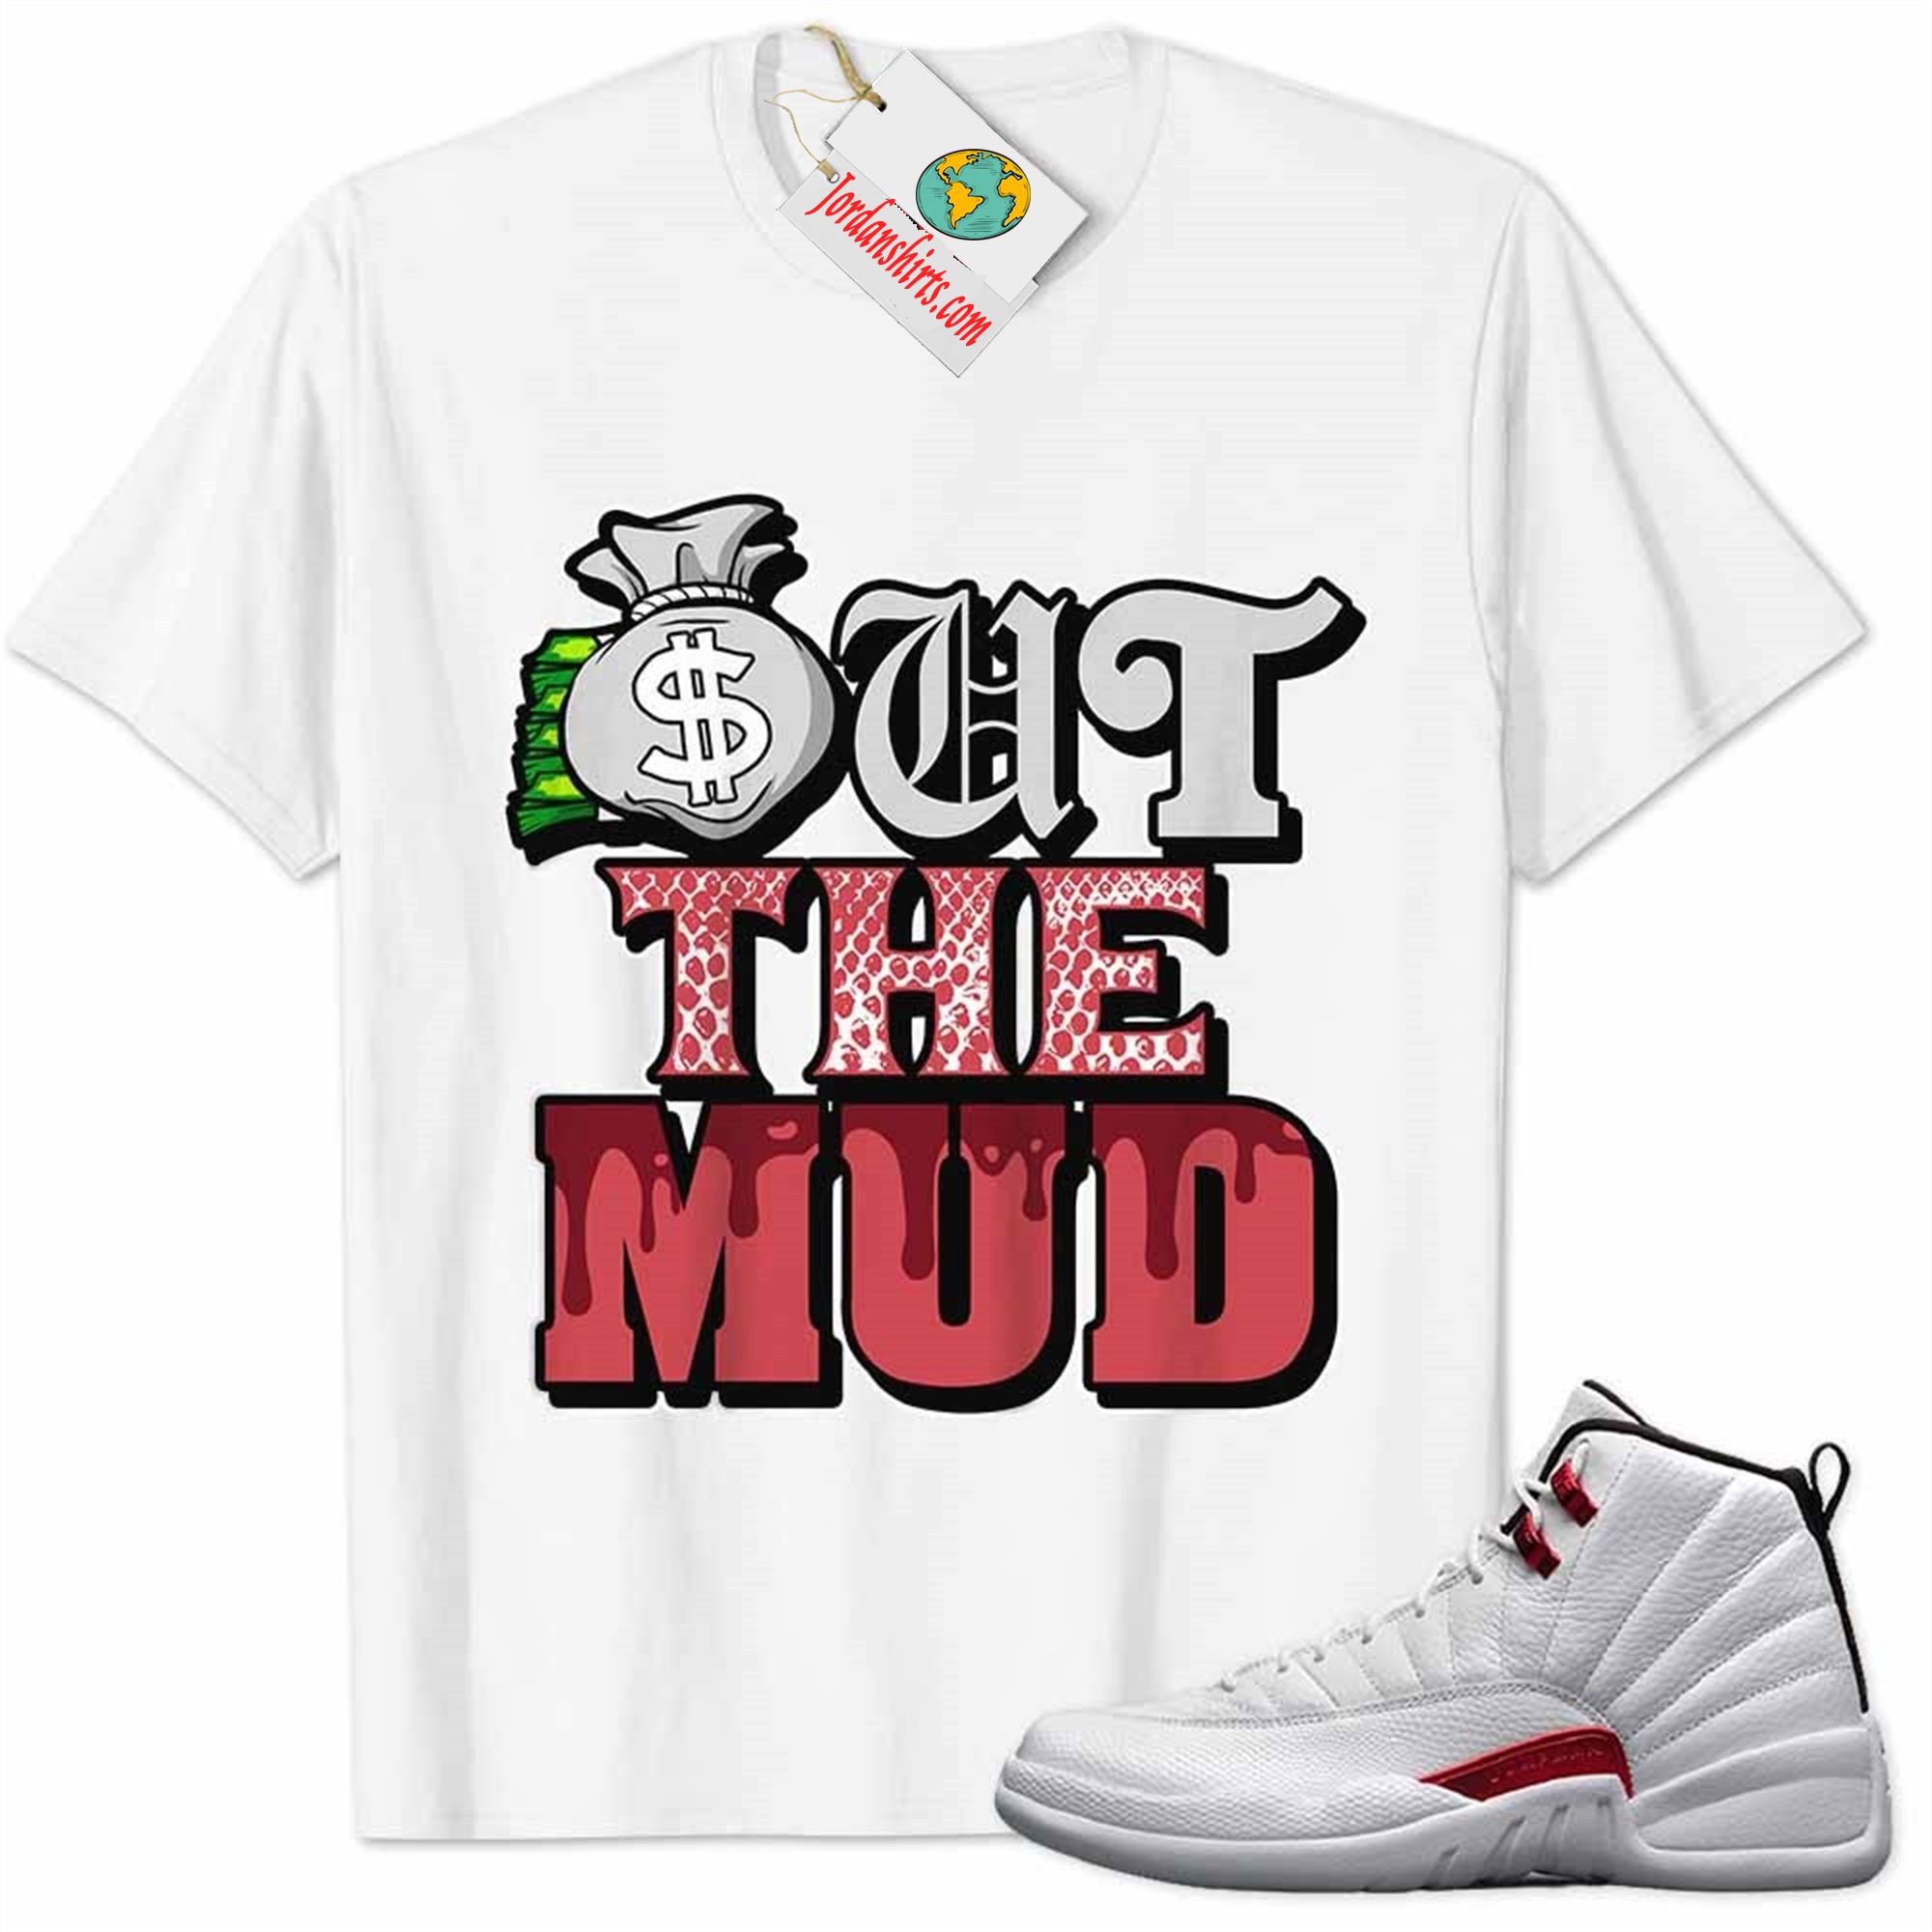 Jordan 12 Shirt, Jordan 12 Twist Shirt Out The Mud Money Bag White Full Size Up To 5xl